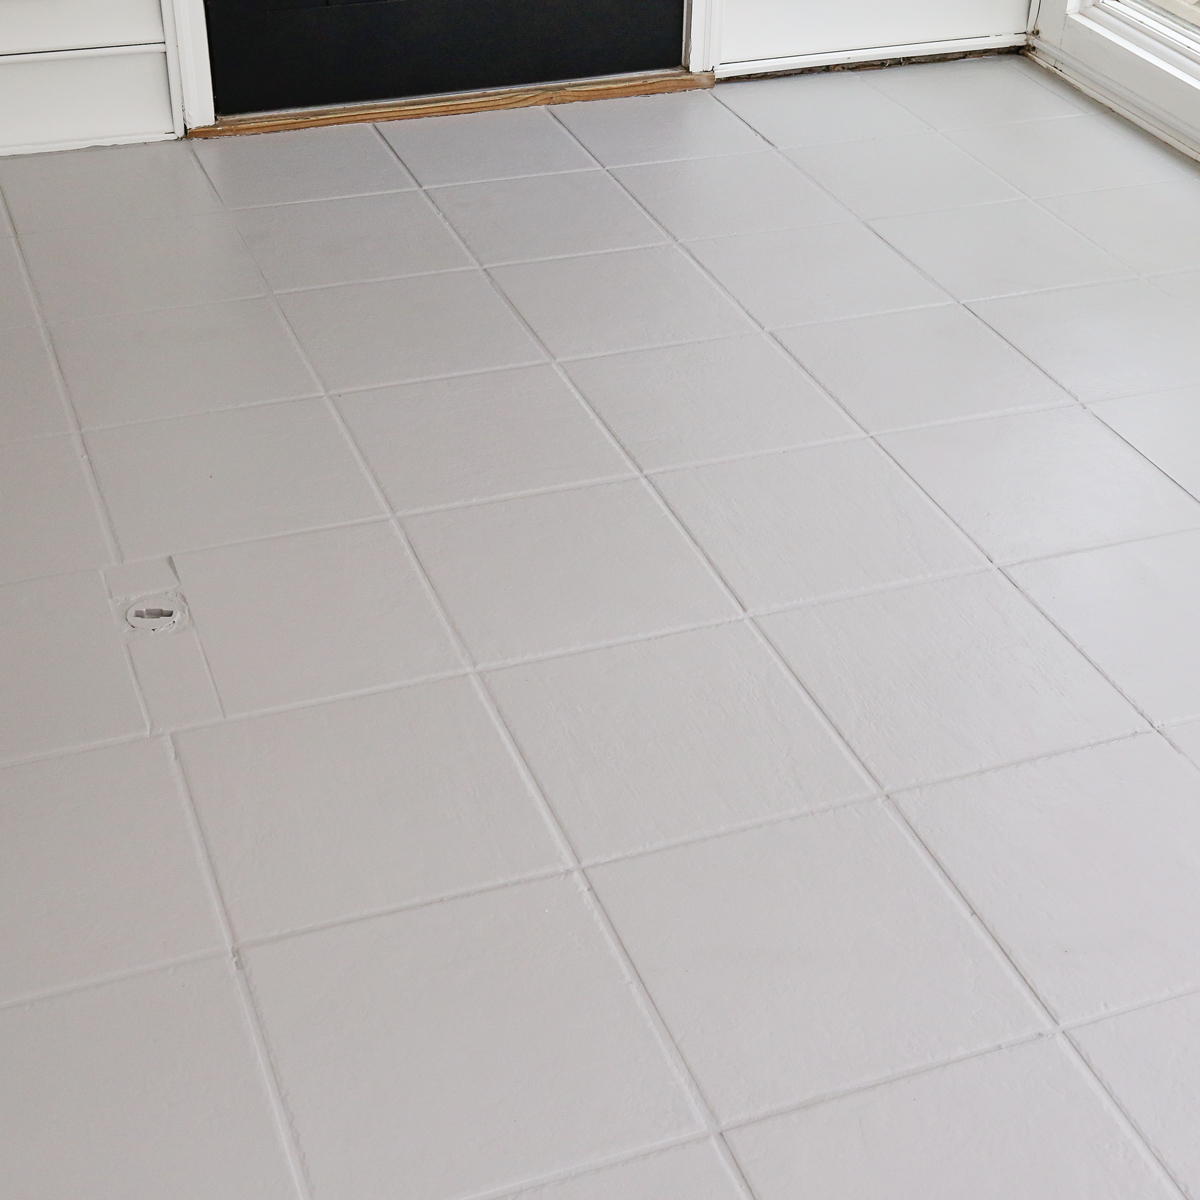 how to paint ceramic floor tile